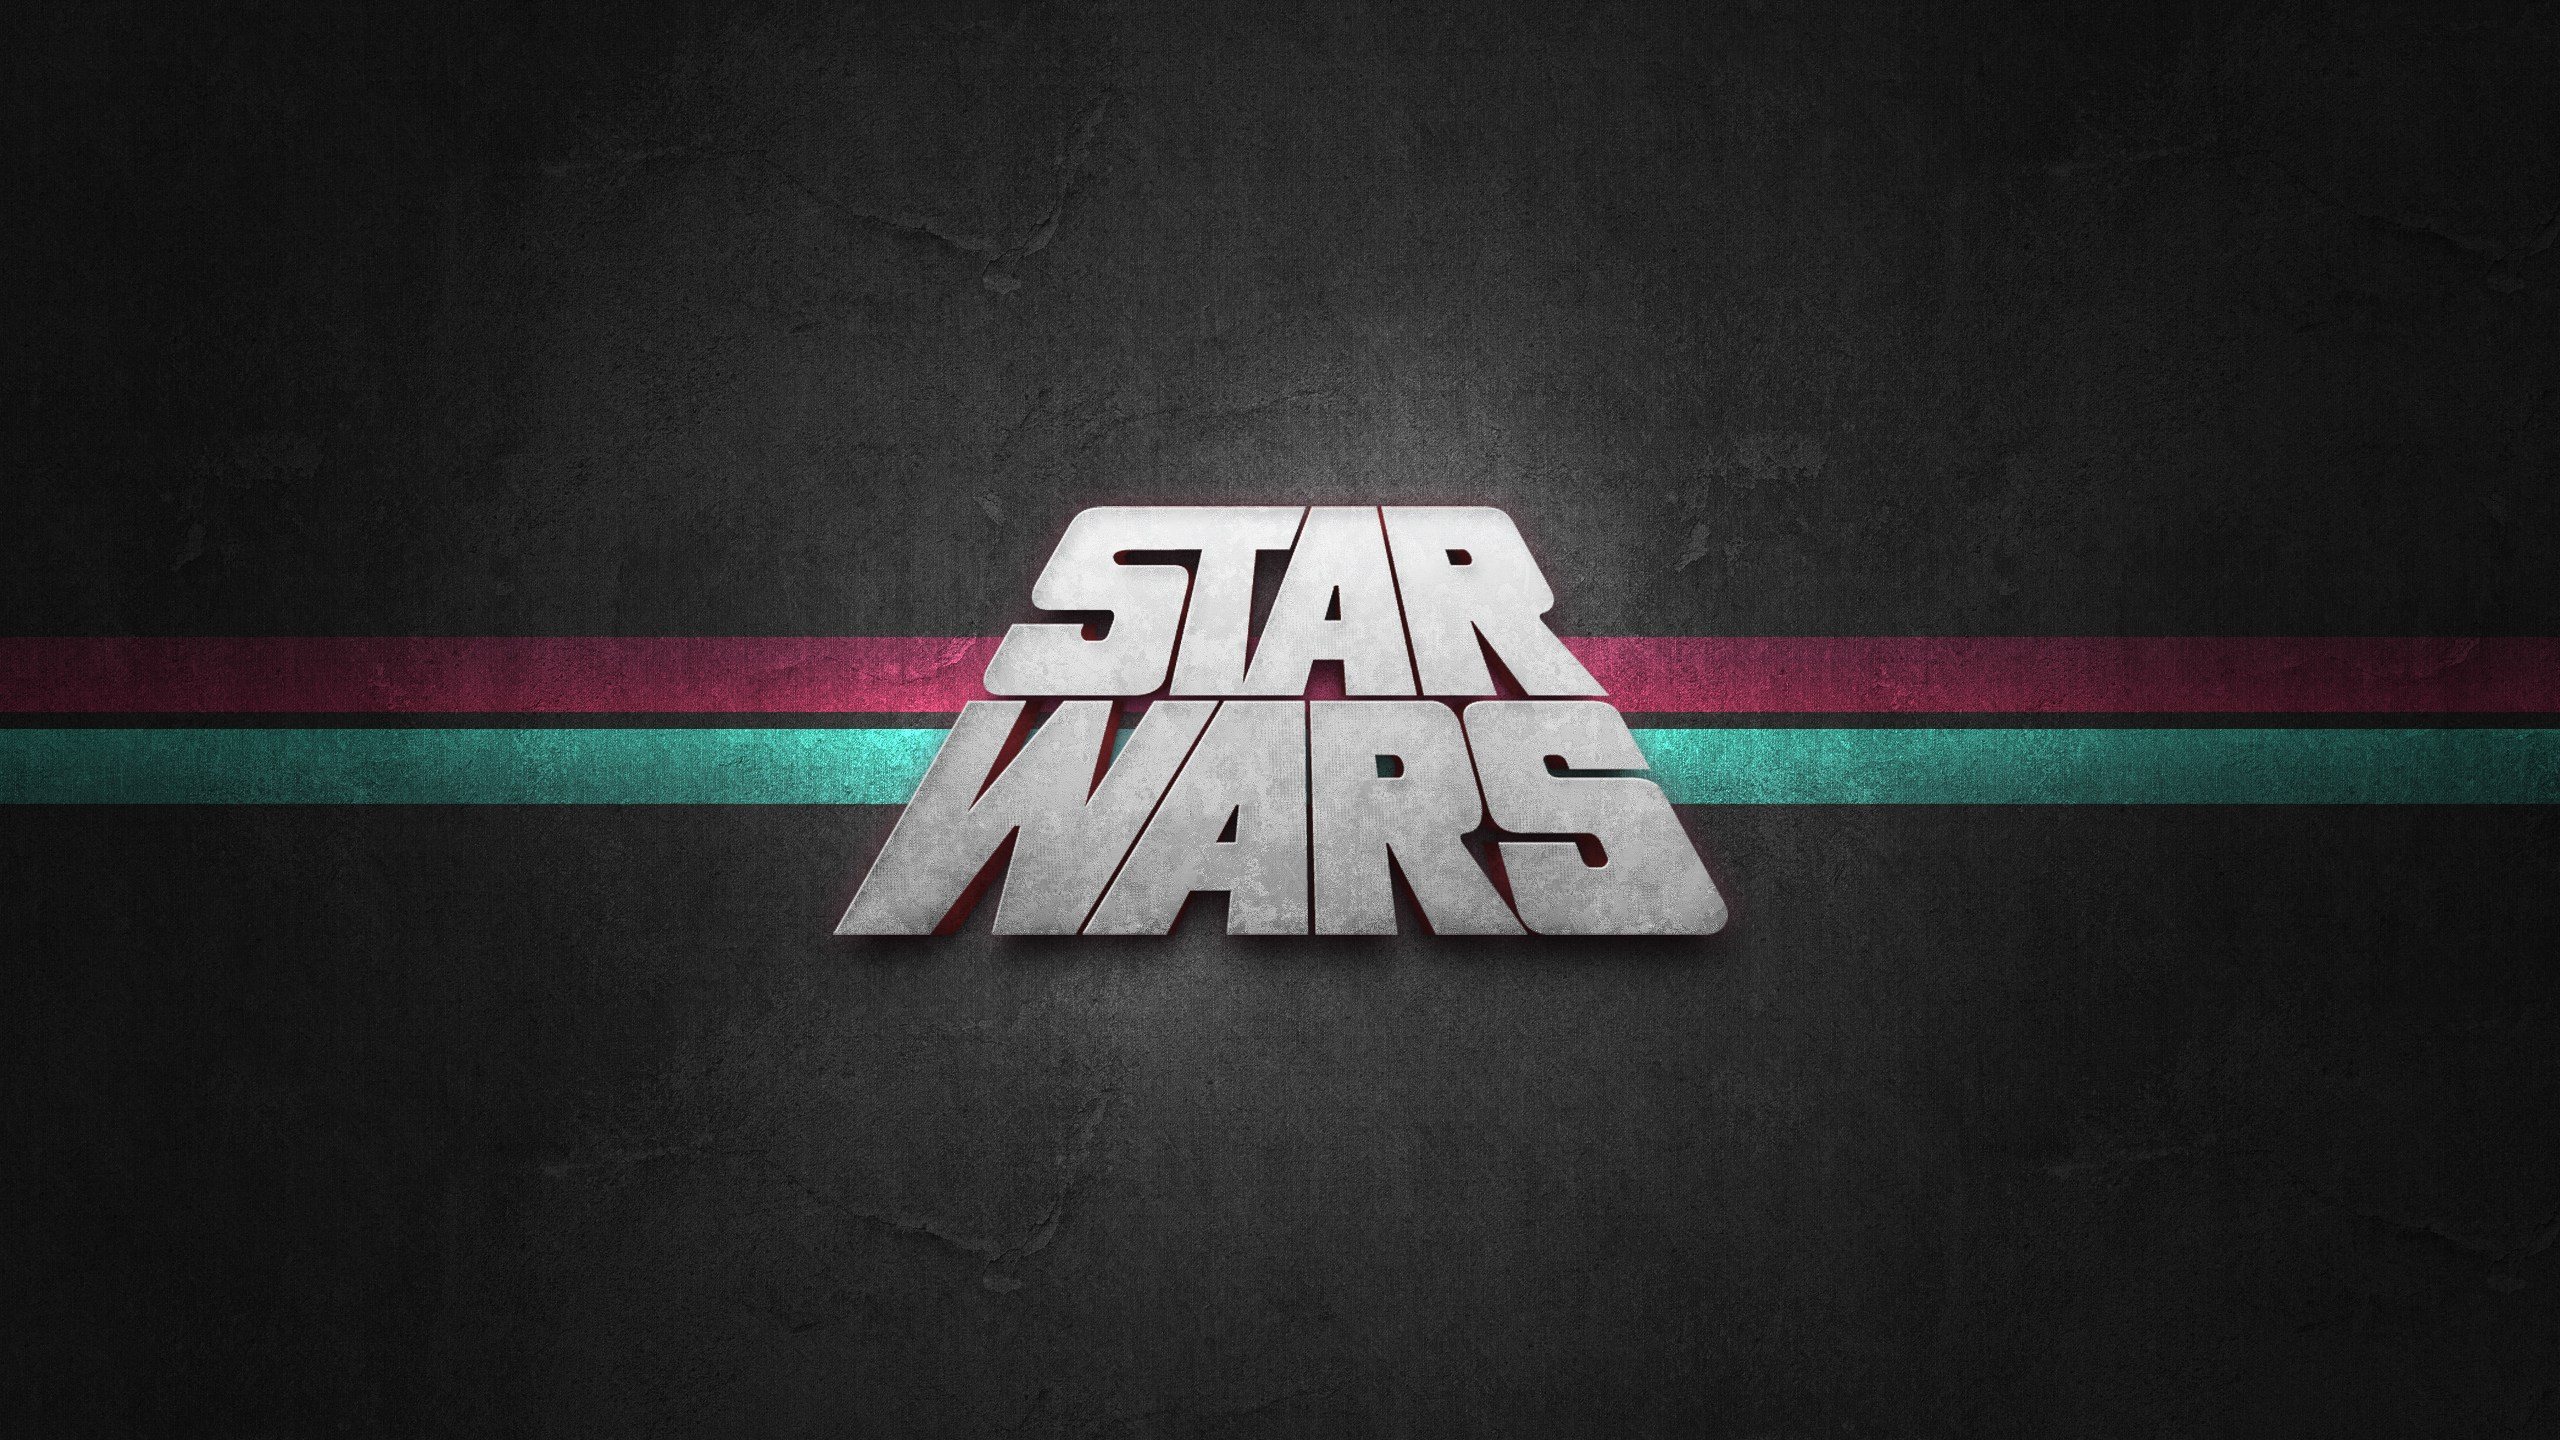 Star Wars Full HD Wallpapers download 1080p desktop backgrounds